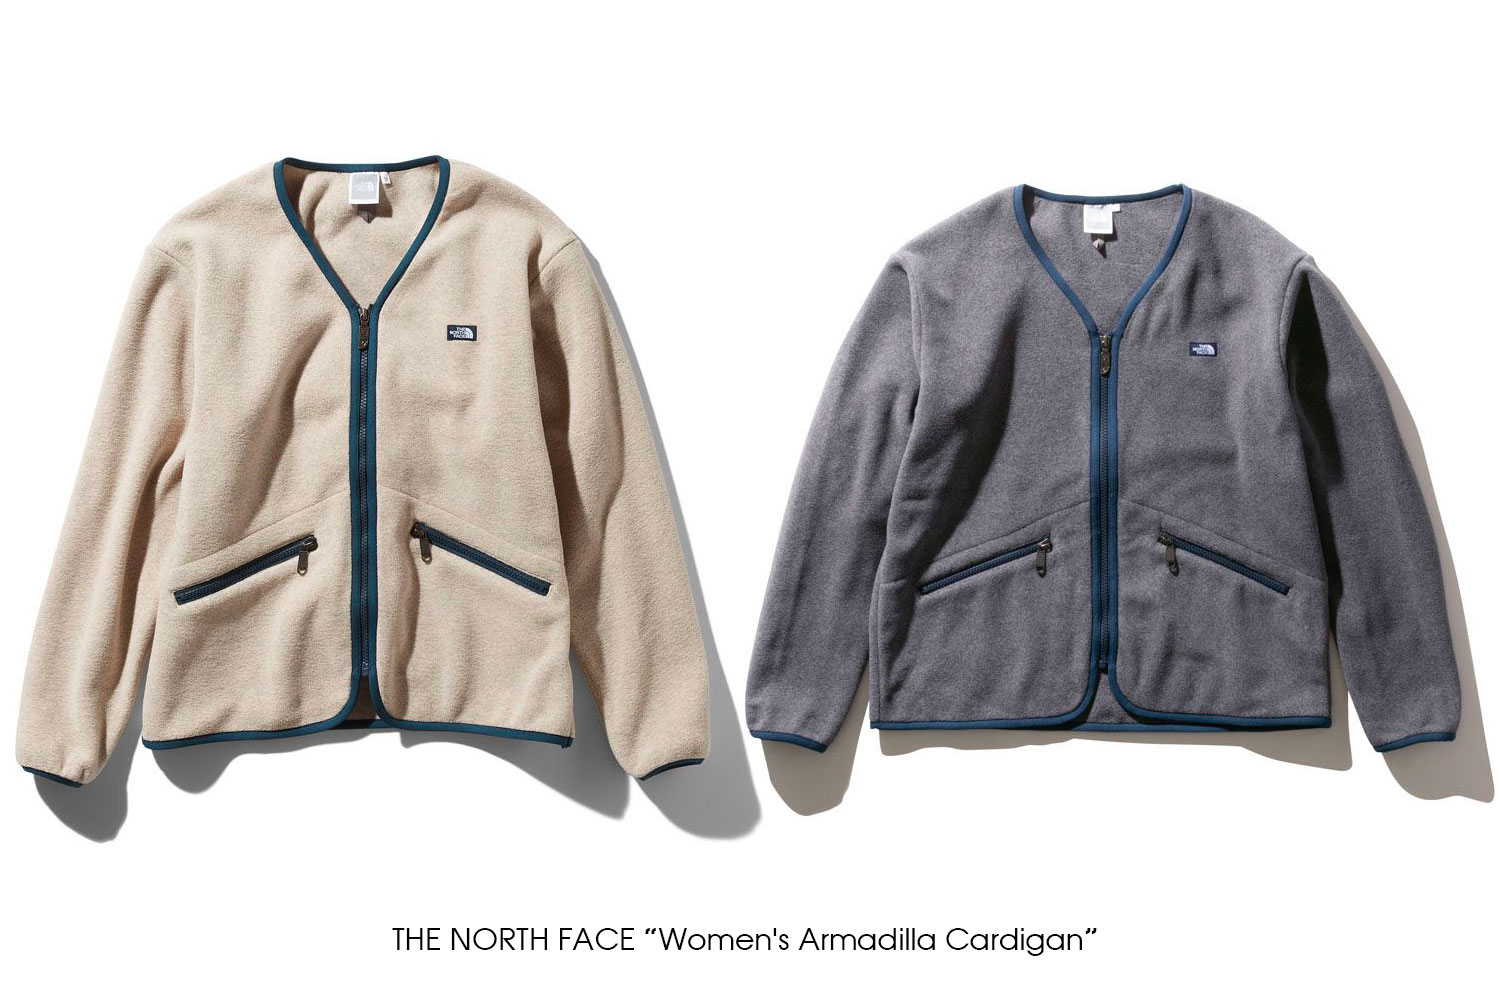 THE NORTH FACE "Women's Armadilla Cardigan"